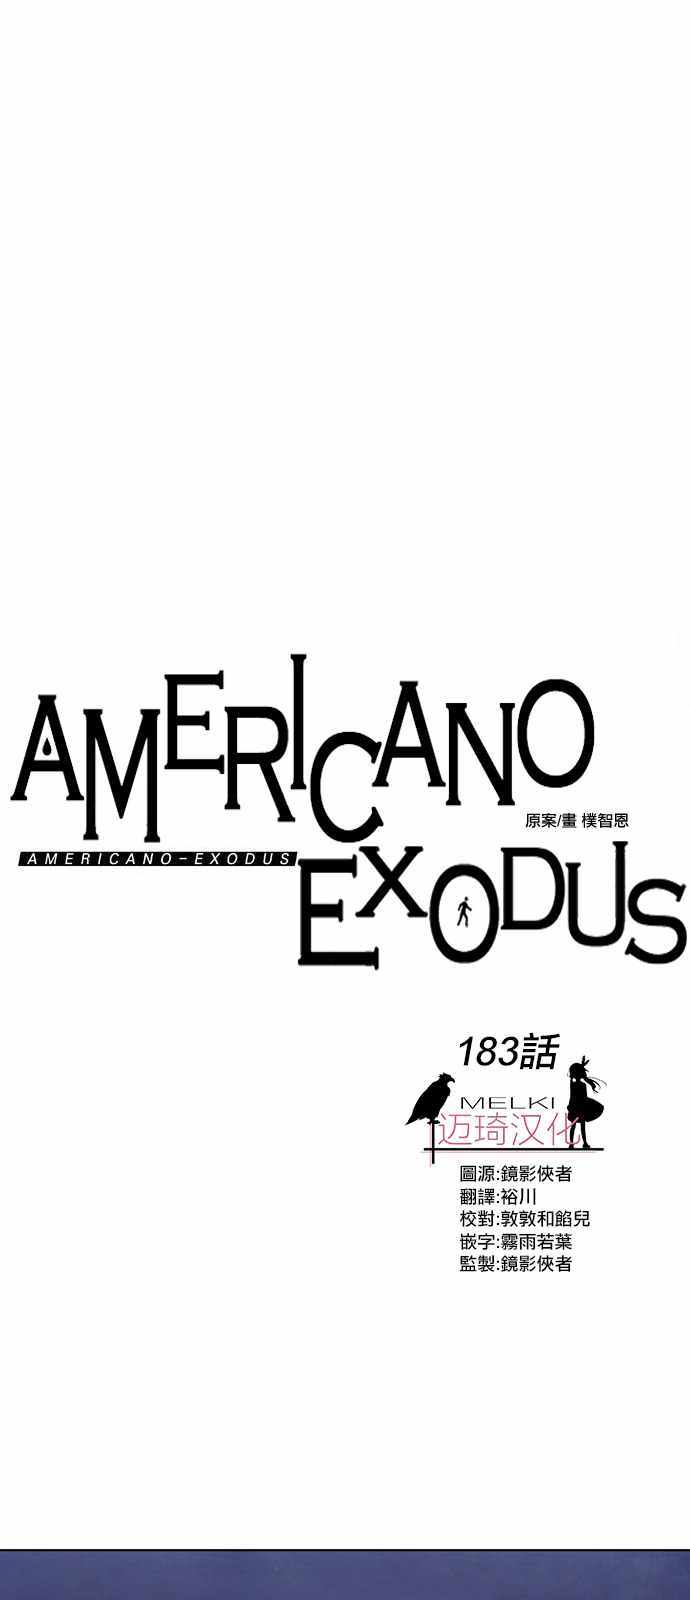 《Americano-exodus》漫画 exodus 183集